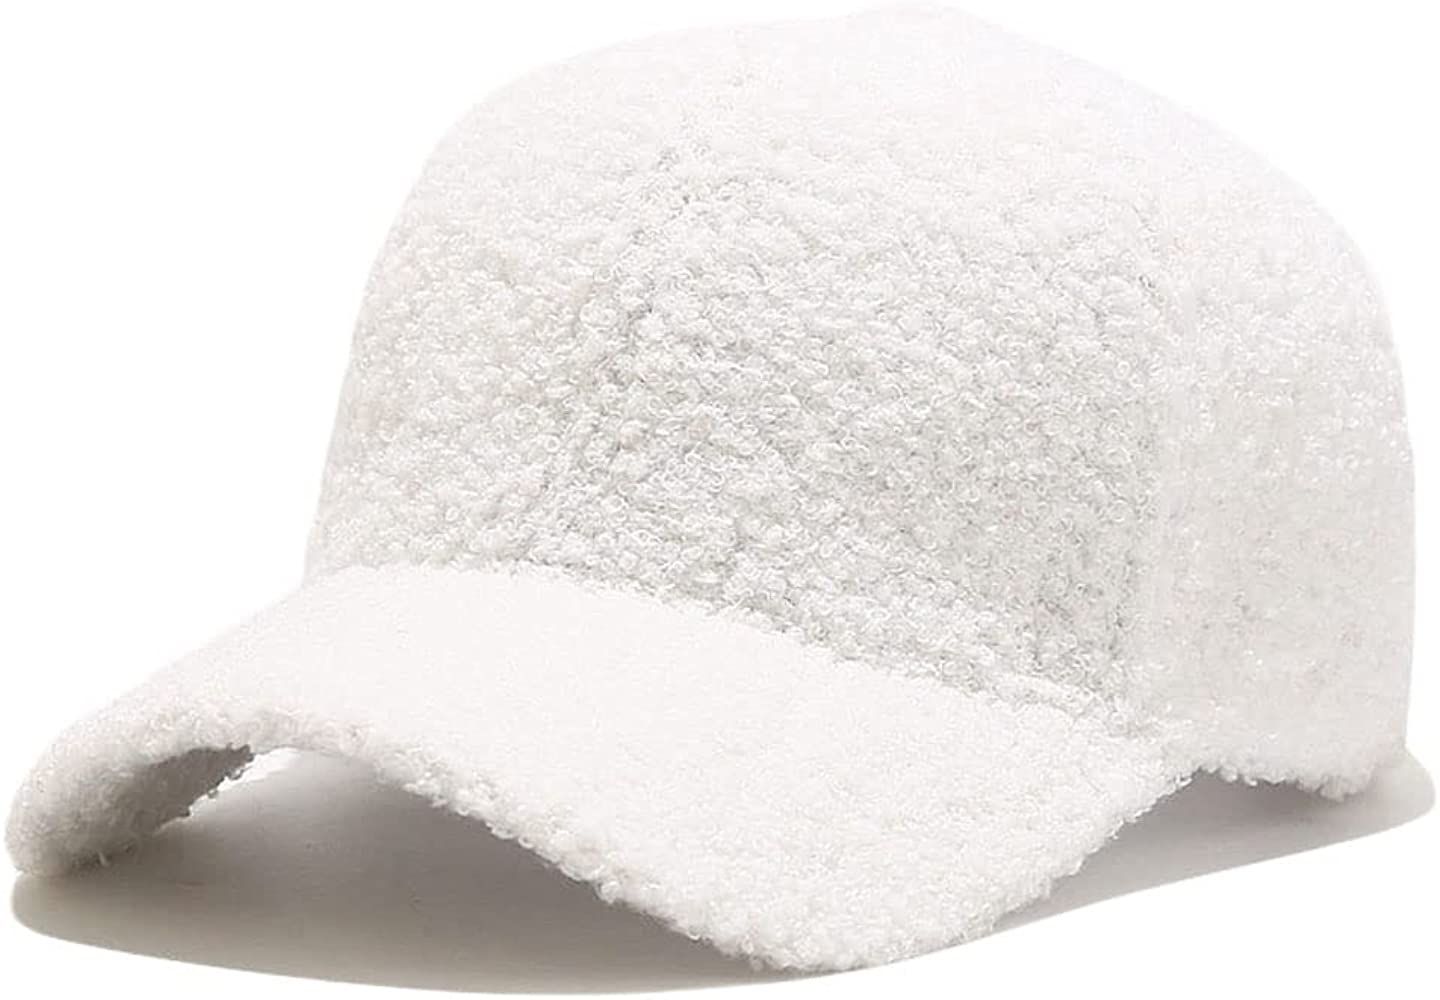 Avilego Winter Baseball Cap for Women Lamb Wool Solid Color Warm Baseball Cap for Outdoor Travel | Amazon (US)